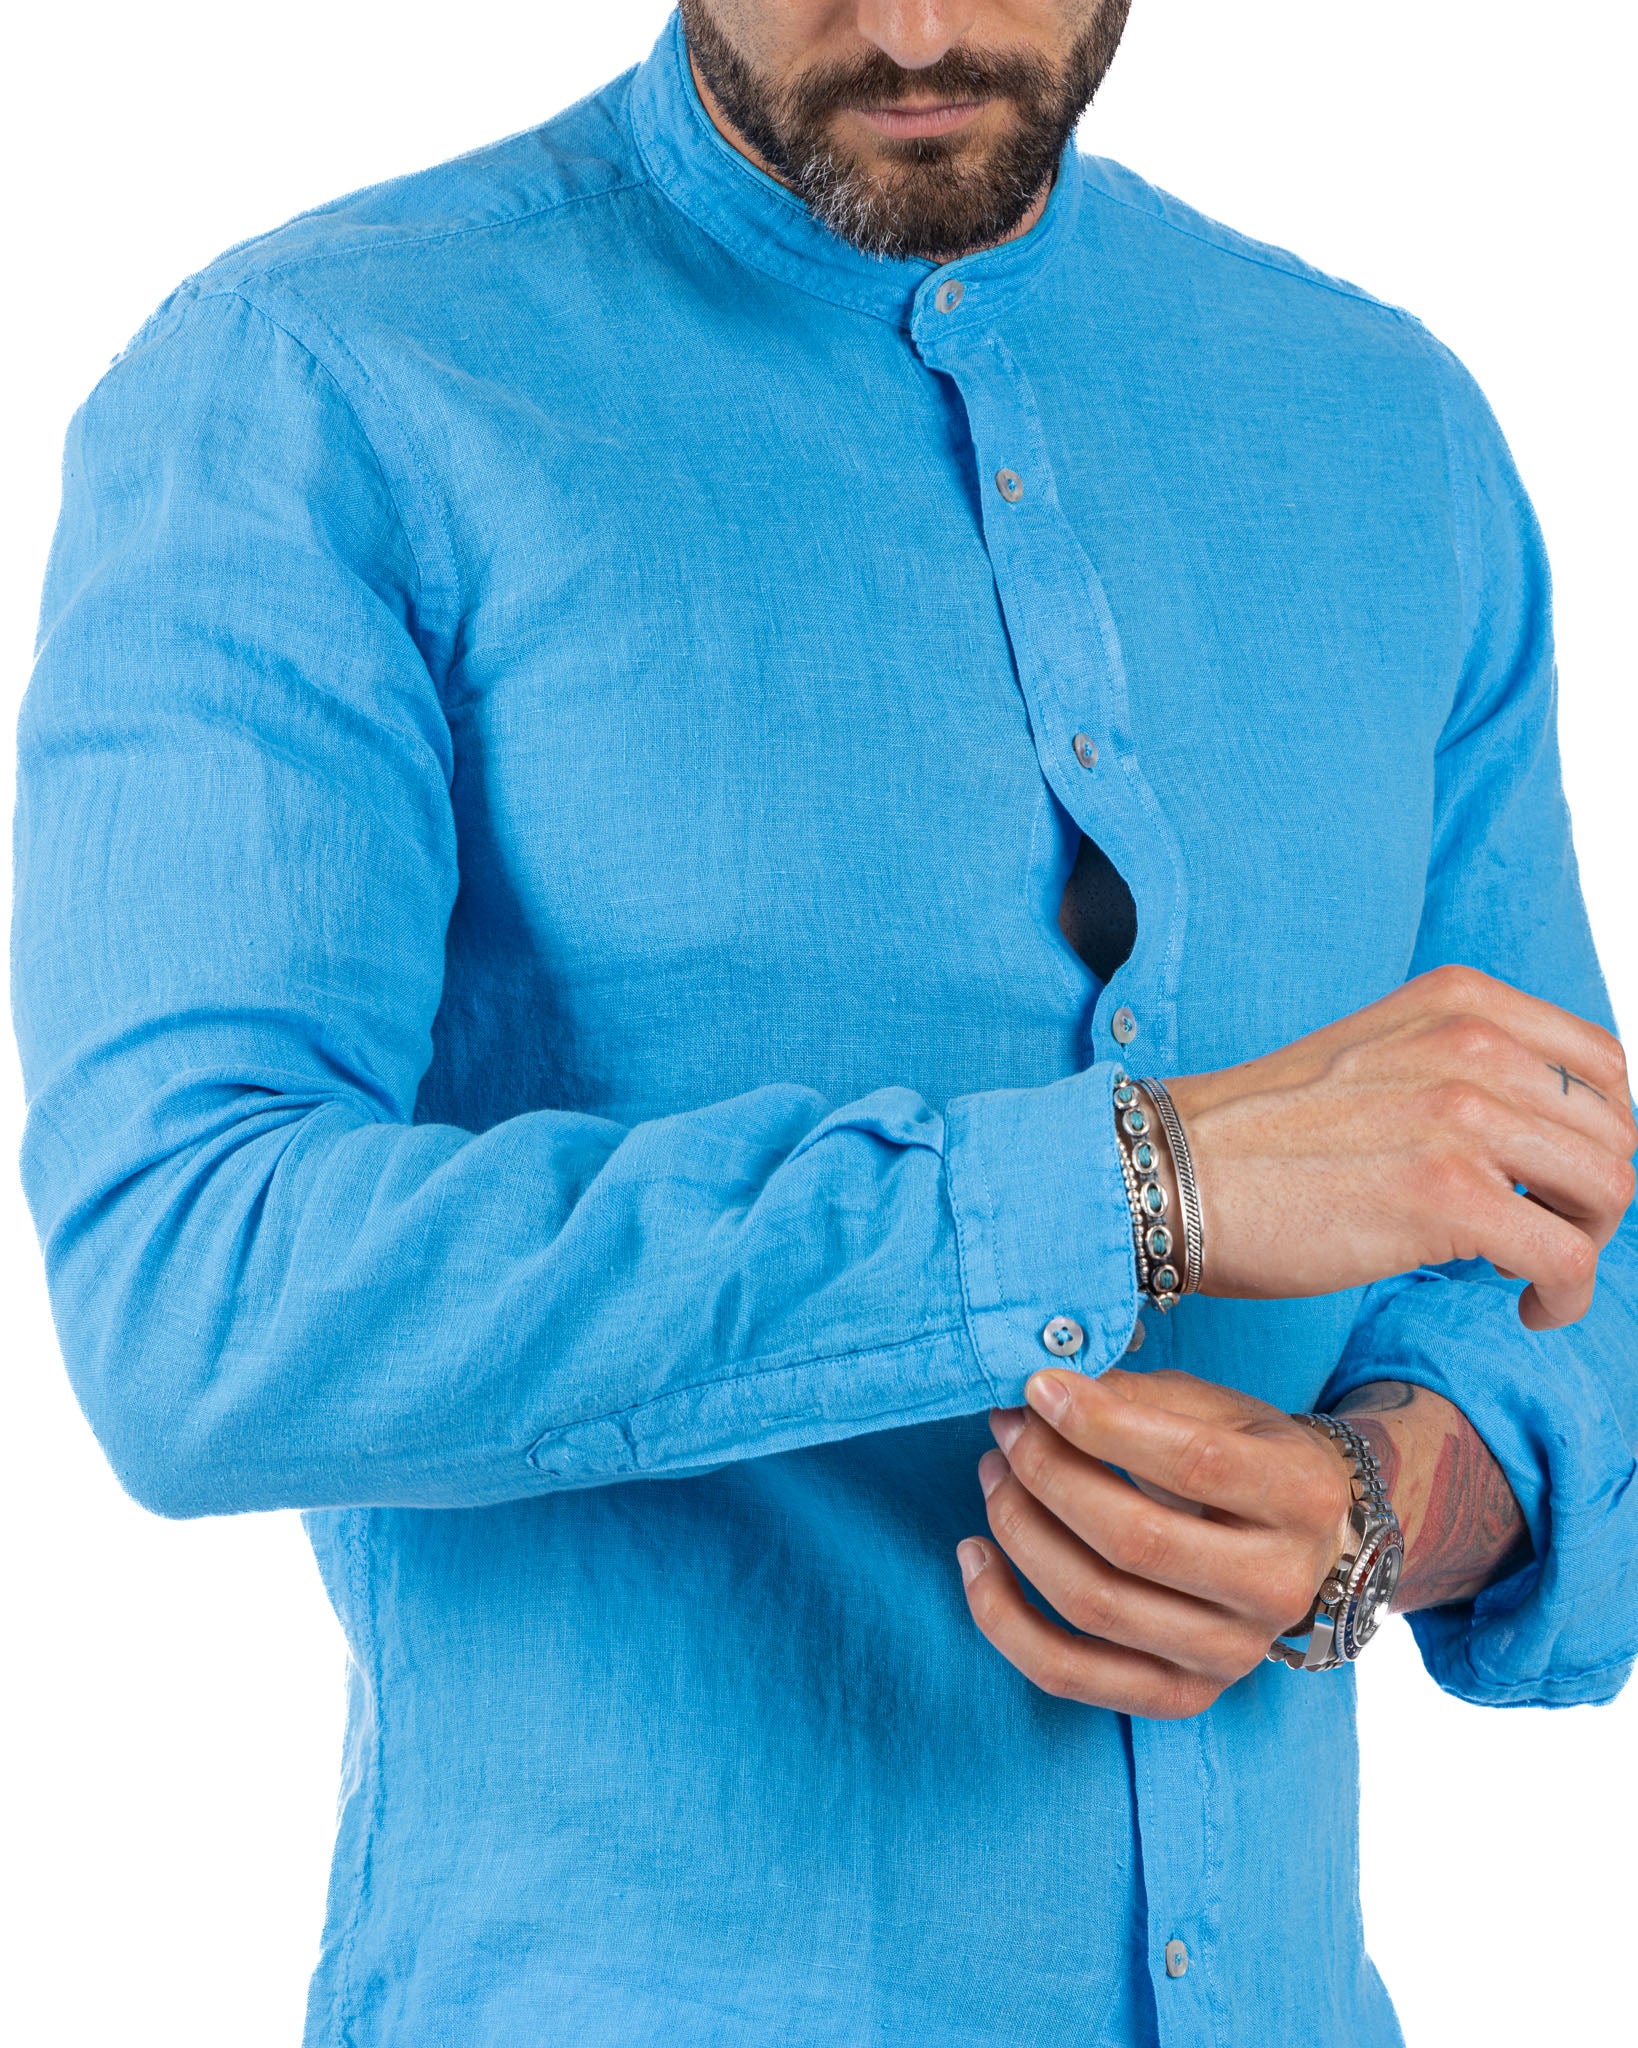 Nizza - Korean shirt in turquoise pure linen